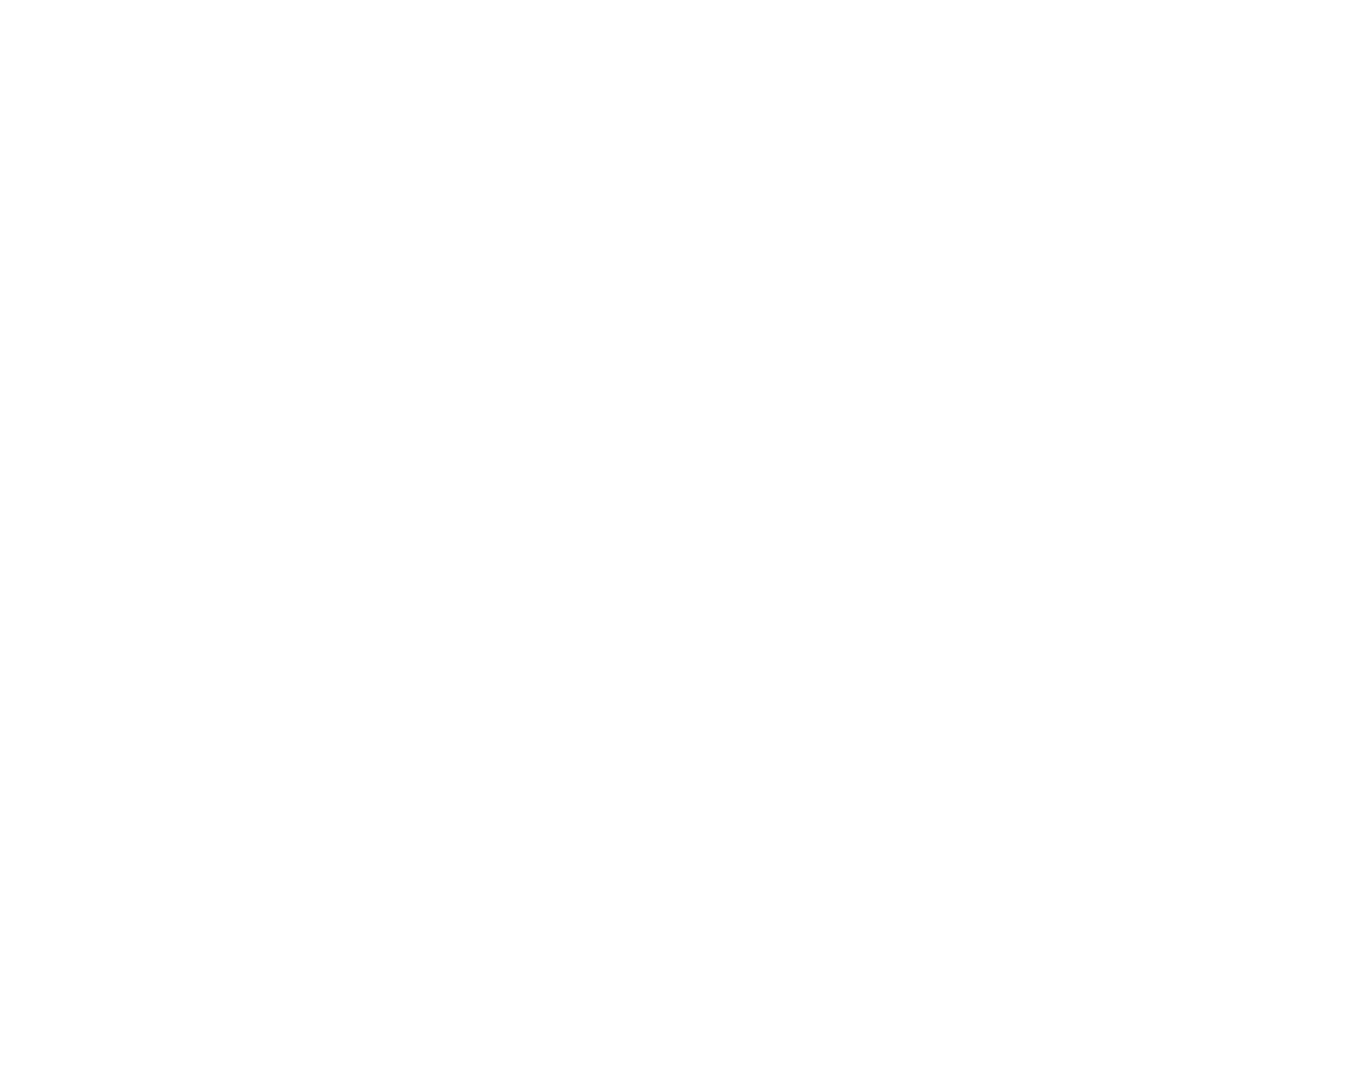 XO Capital